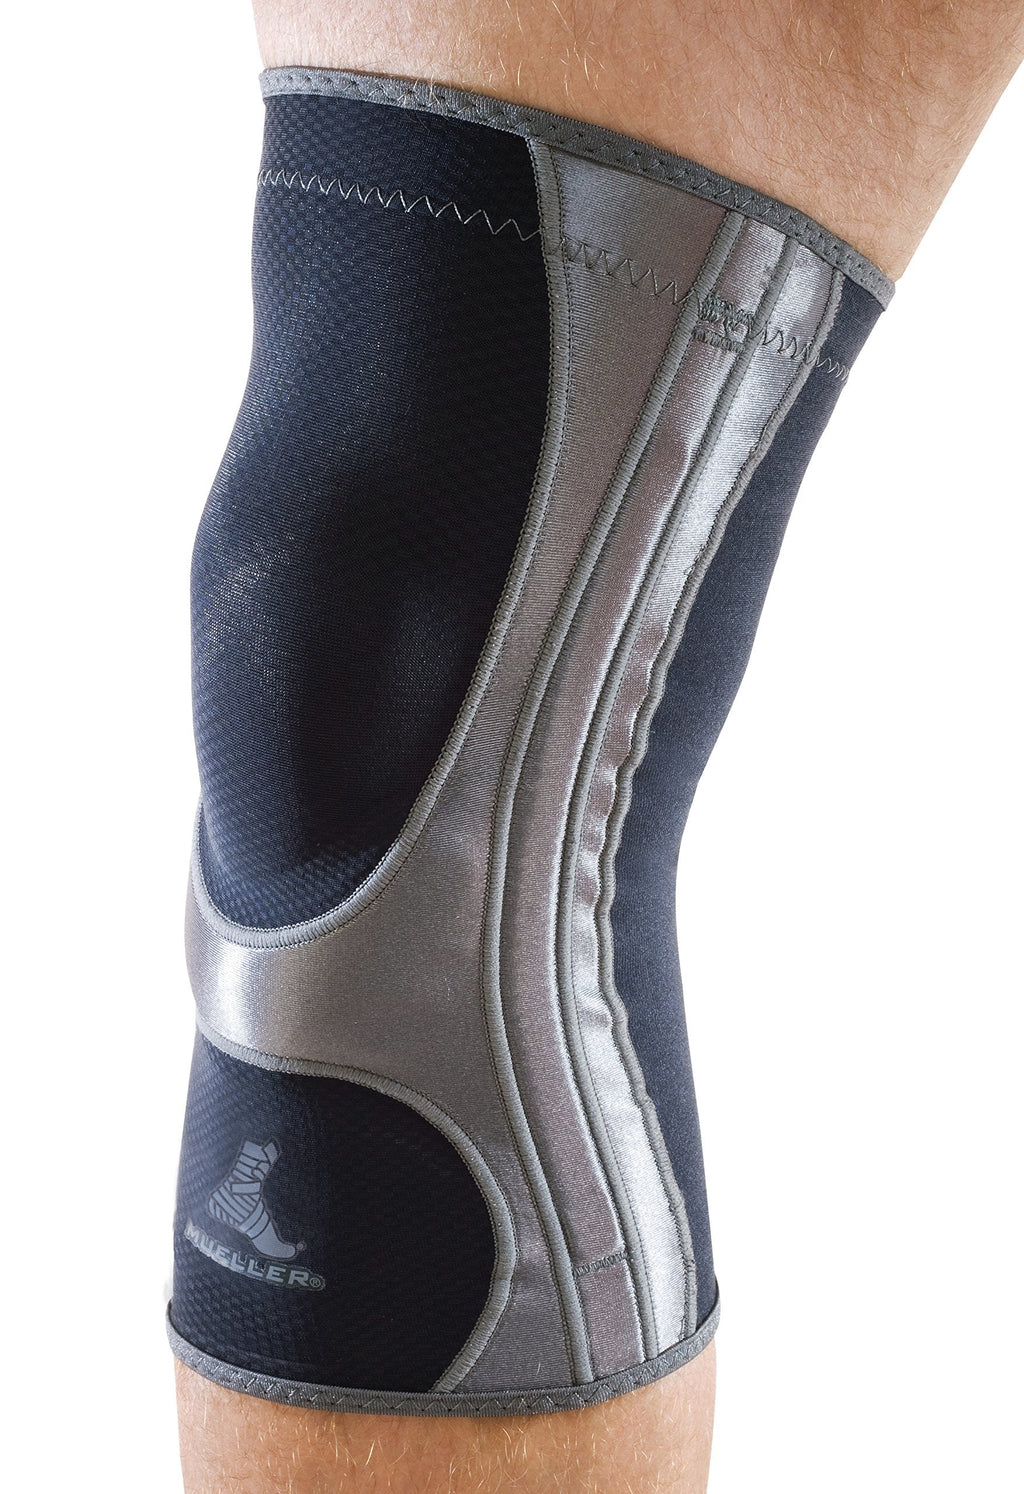 [Australia] - Mueller Sports Medicine Hg80 Knee Support Sleeve, for Men and Women, Black, Large Large (Pack of 1) 